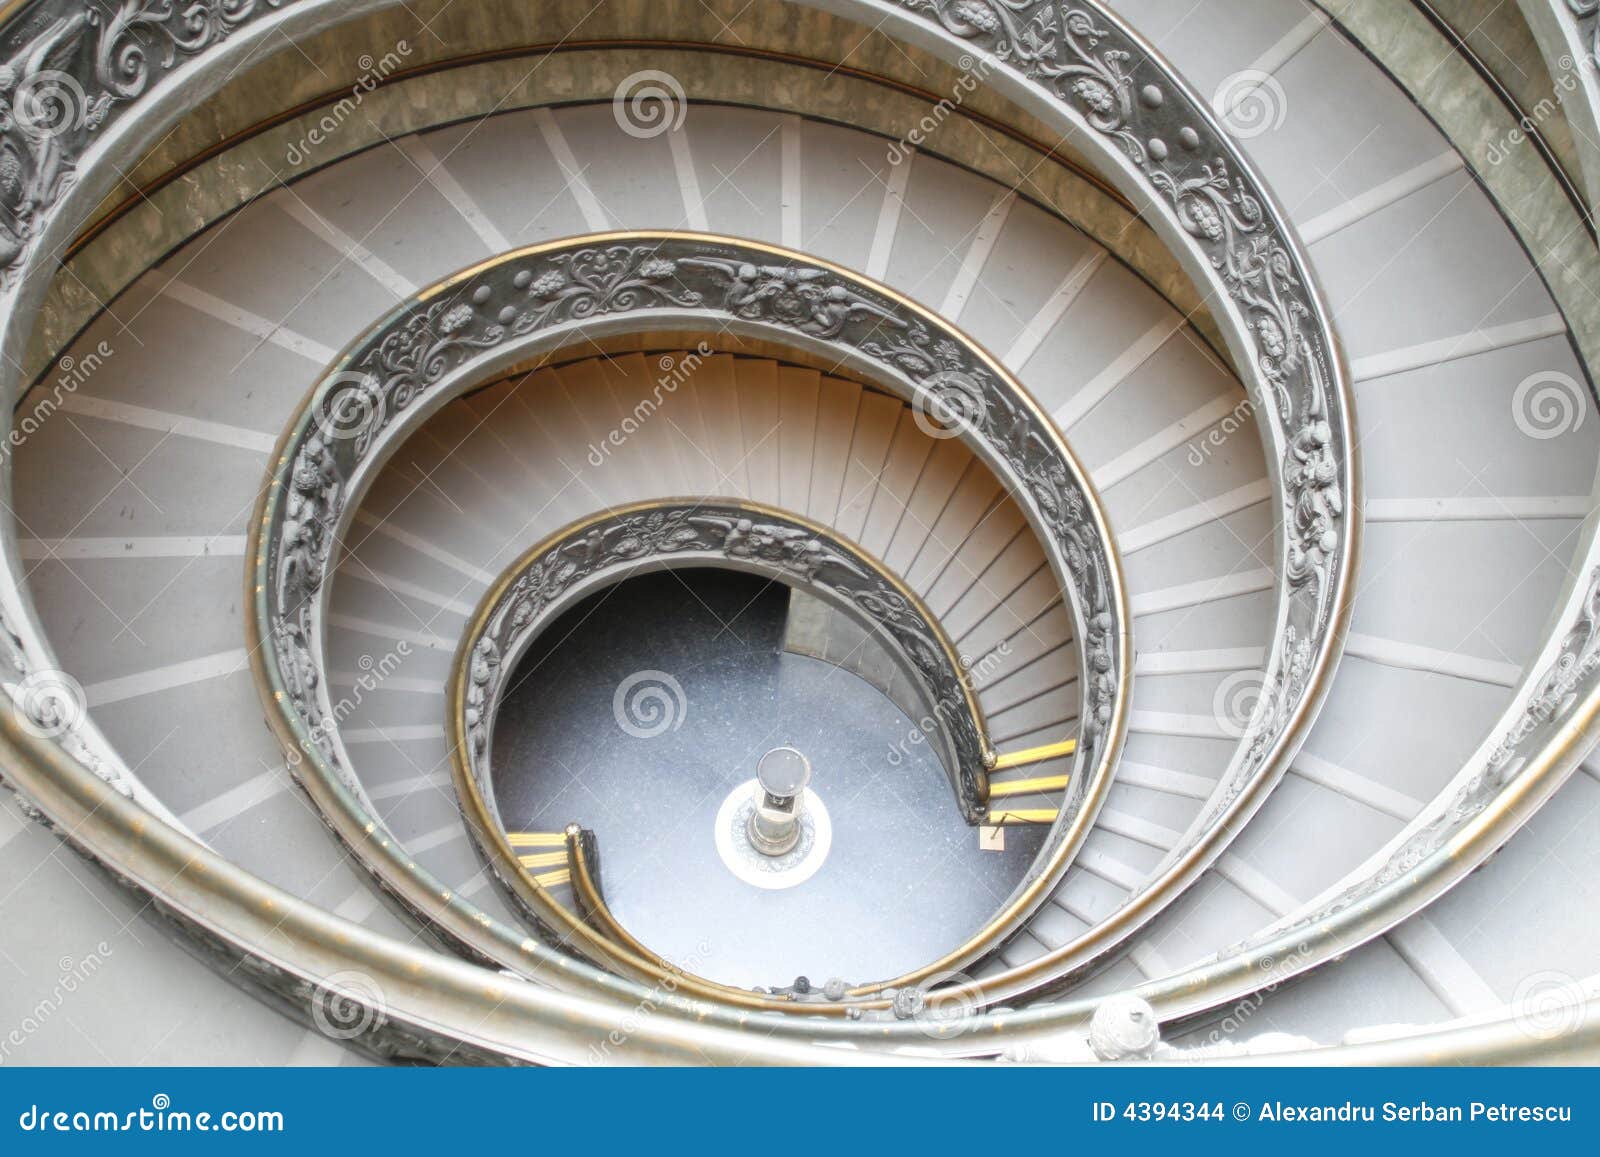 Escadas circulares no museu de vatican